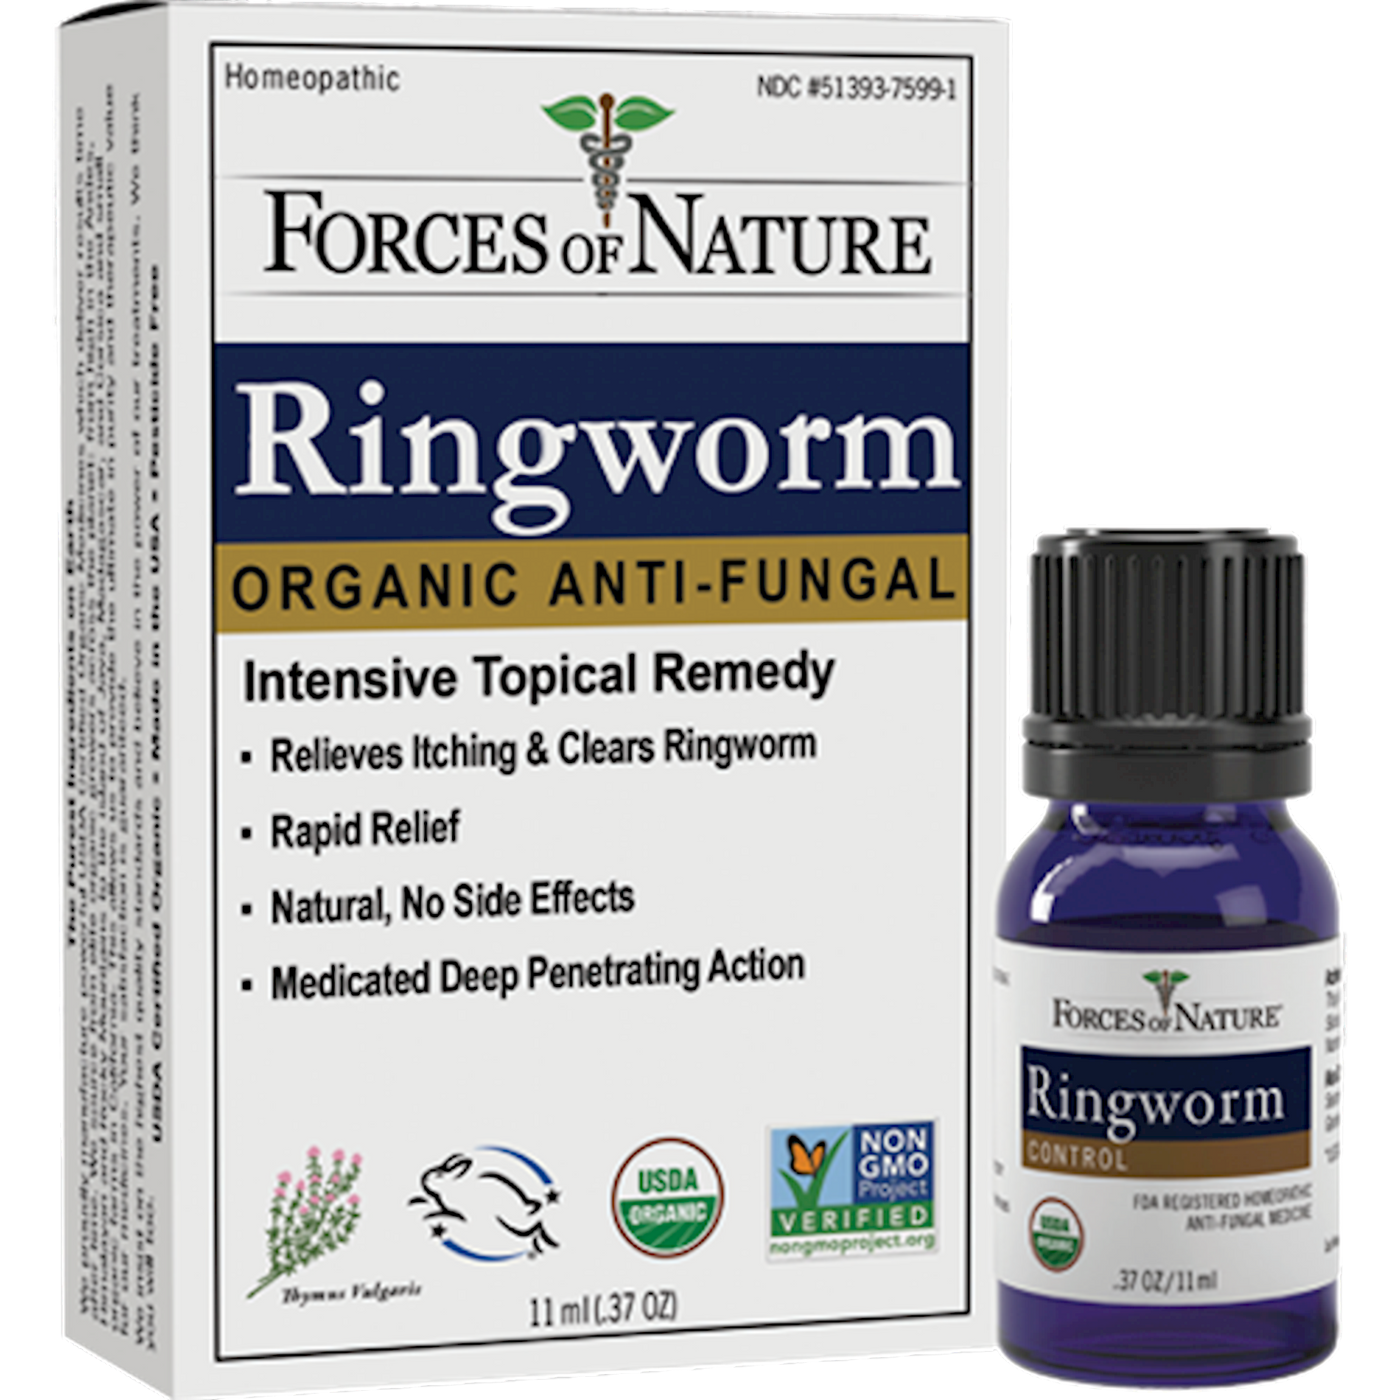 Ringworm Organic .37 oz Curated Wellness